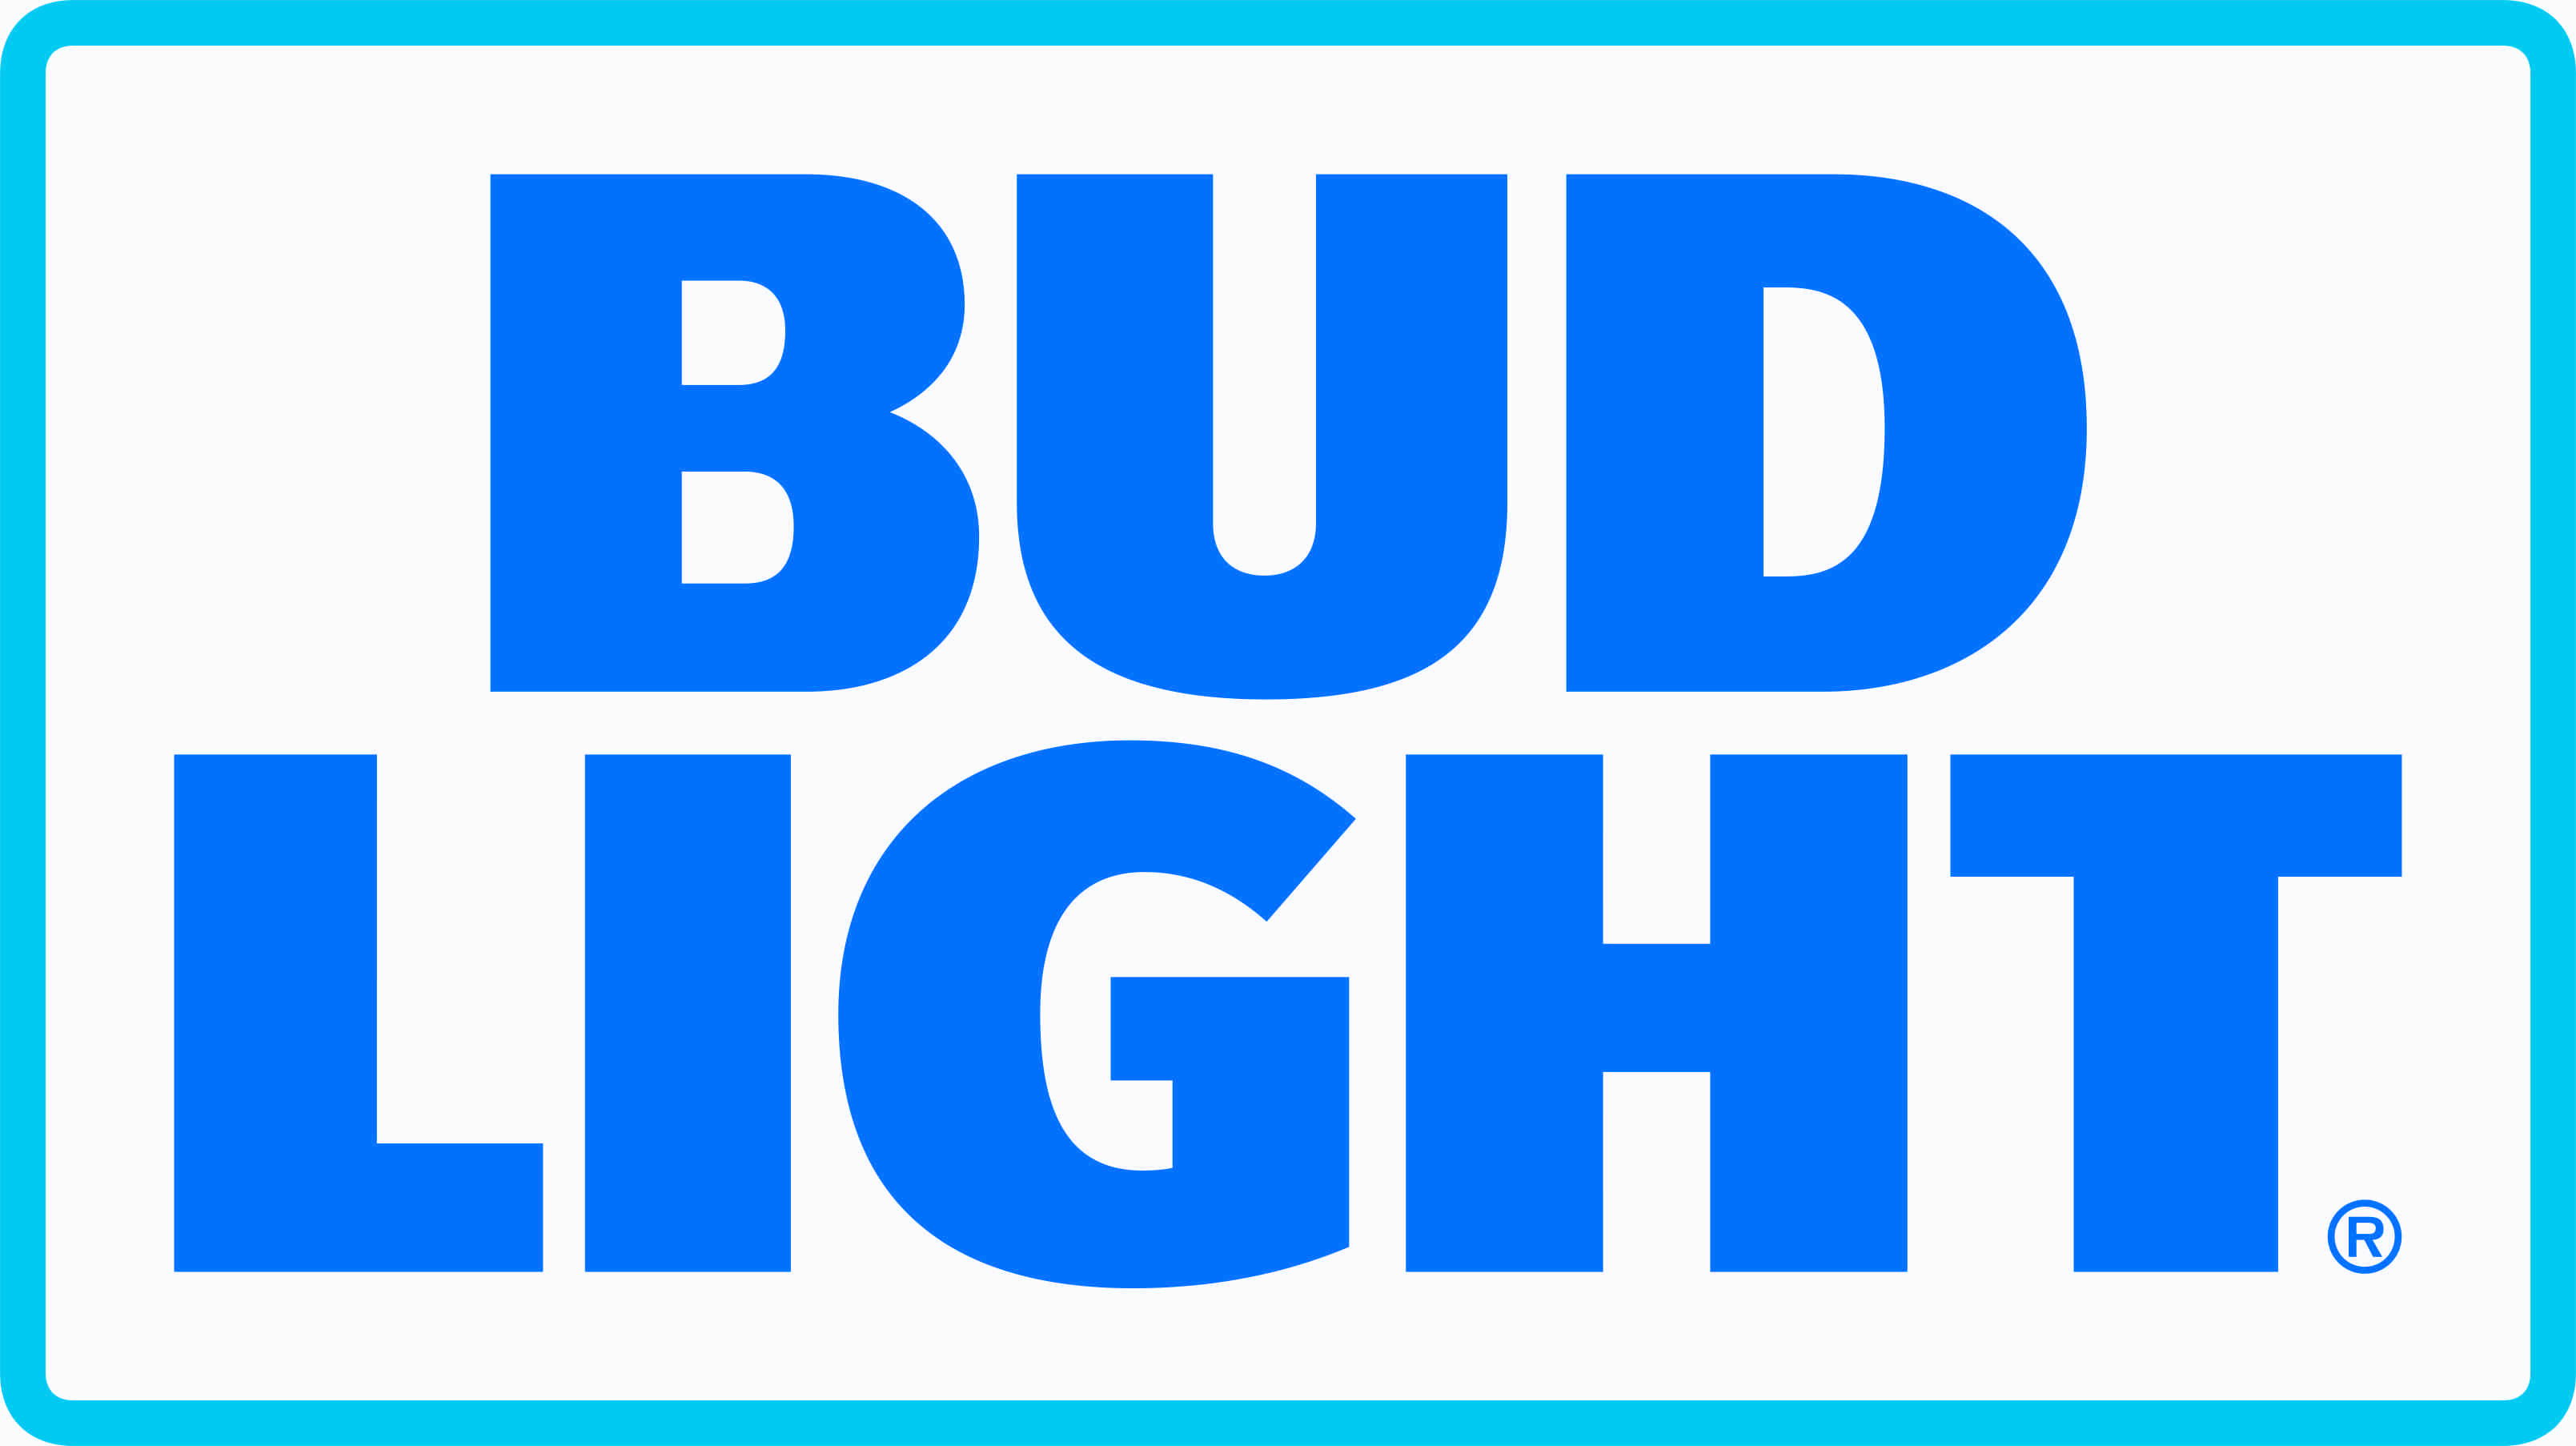 Bud Light Logo - 2016 Bud Light logo - The Mariners' Museum and Park